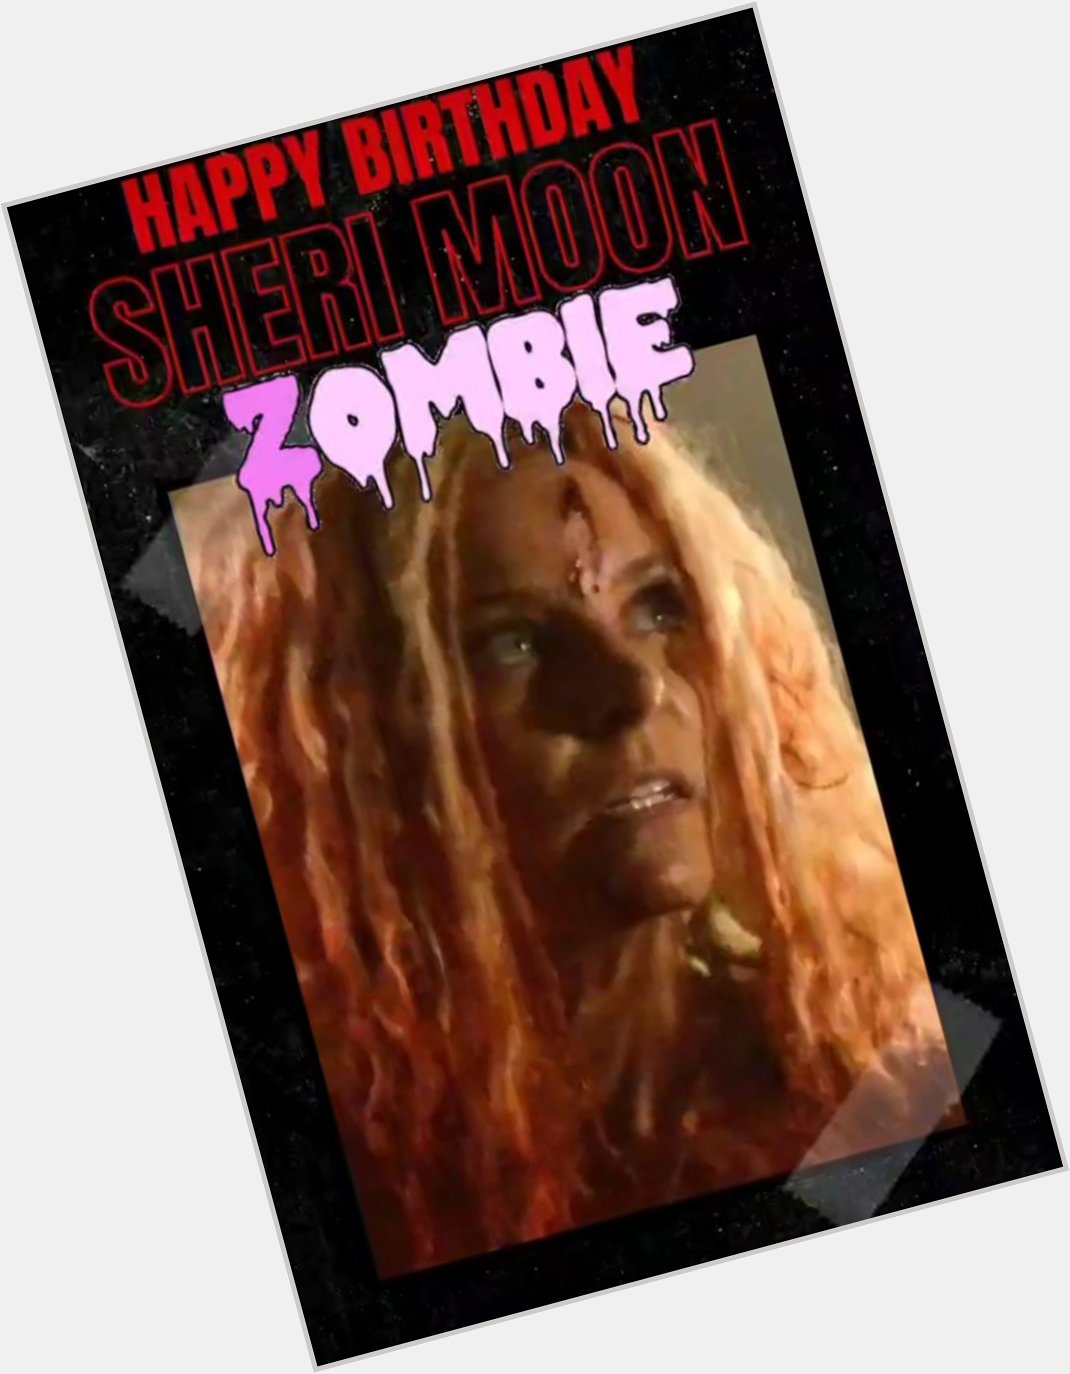 Happy birthday to THE badass, Sheri Moon Zombie!   